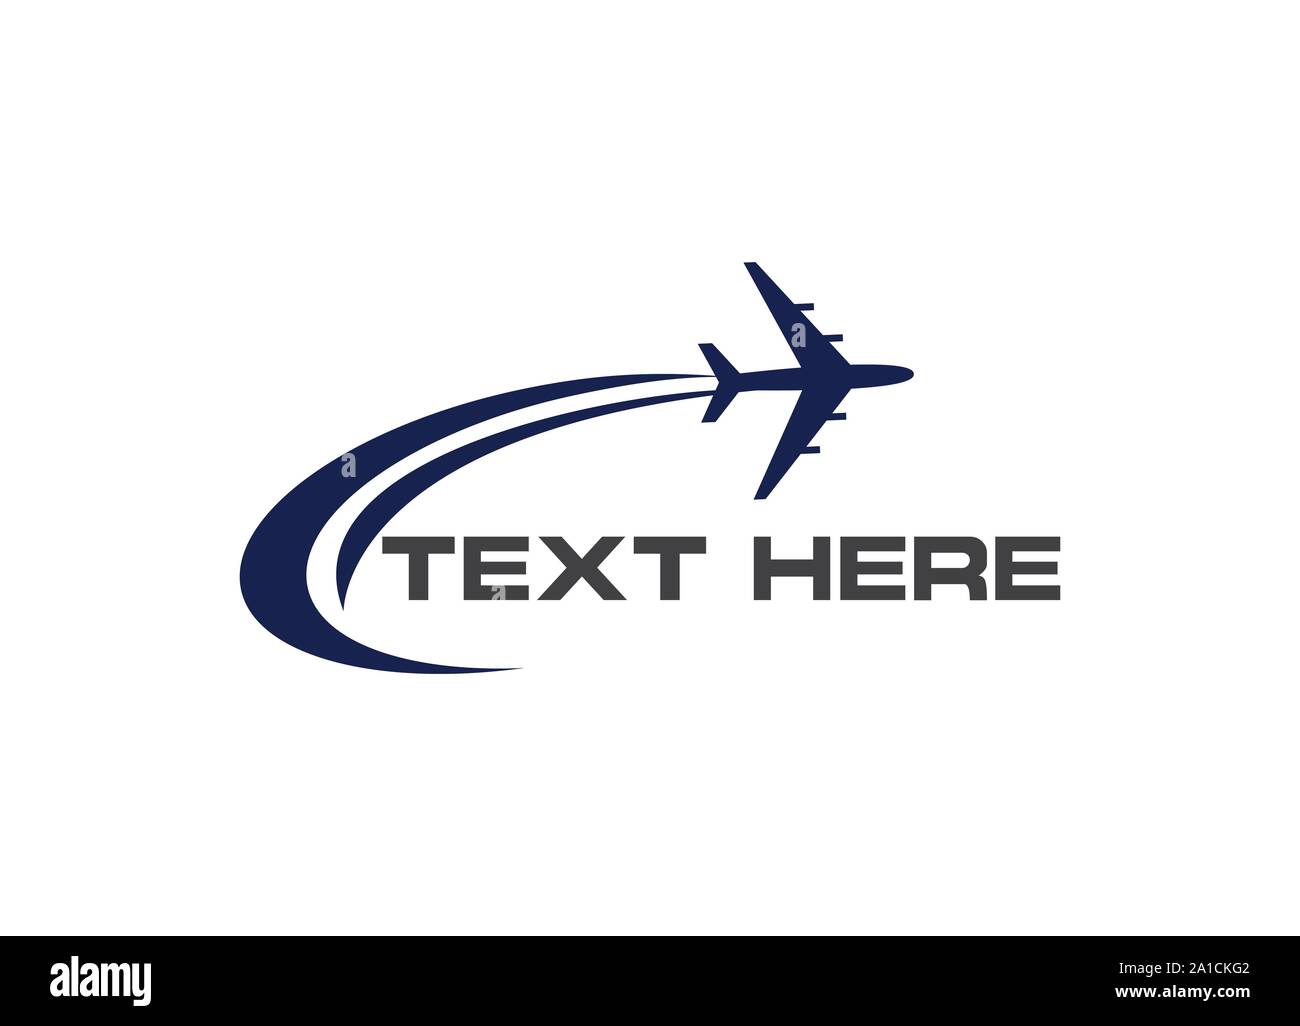 Flugzeugsymbol Vector Illustration design Logo Vorlage, Flugzeug Firmenlogo, Logo, Flugzeug-Vector Logo template Konzeption Illustration. Stock Vektor